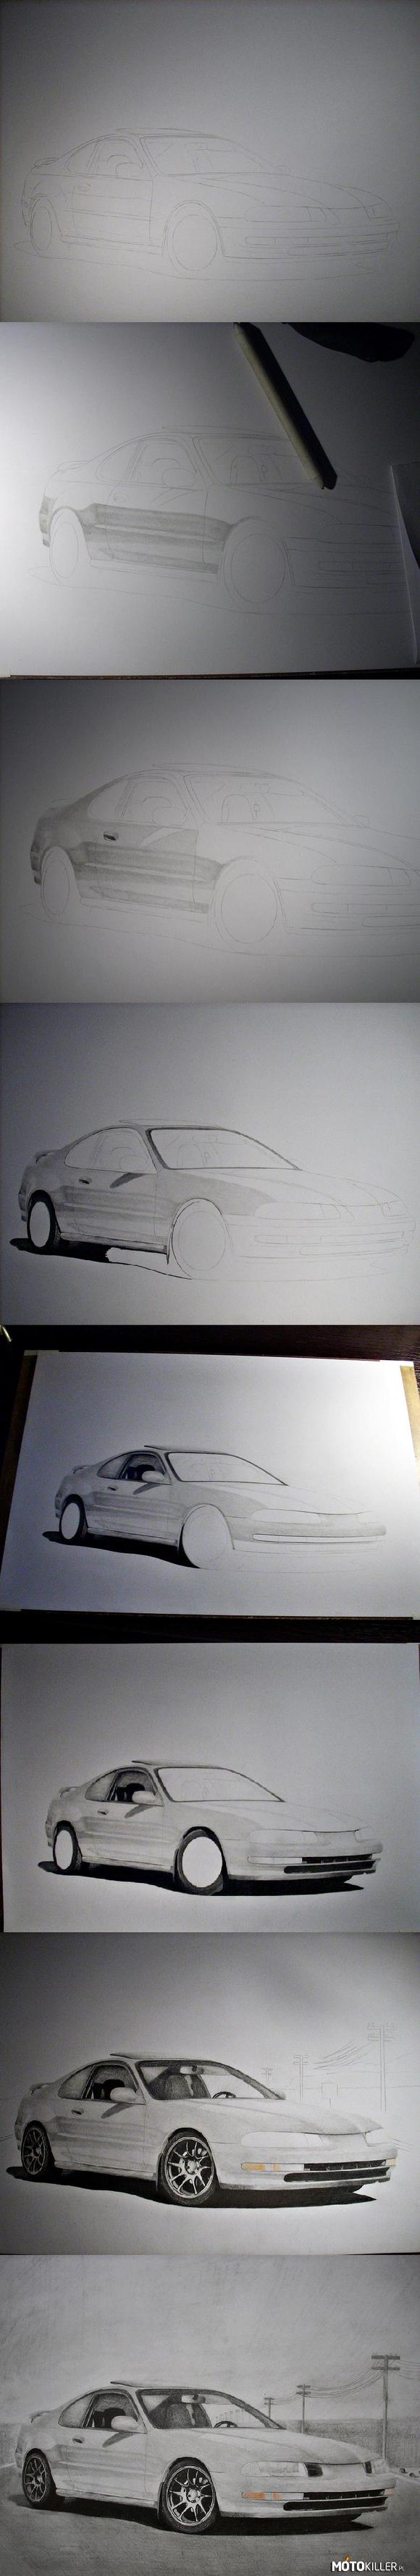 Honda Prelude IV gen. Rysunek w trakcie prac – Rysunek Hondy w trakcie prac. 

Więcej na: 
www.facebook.com/ManiekDrawingStudio 